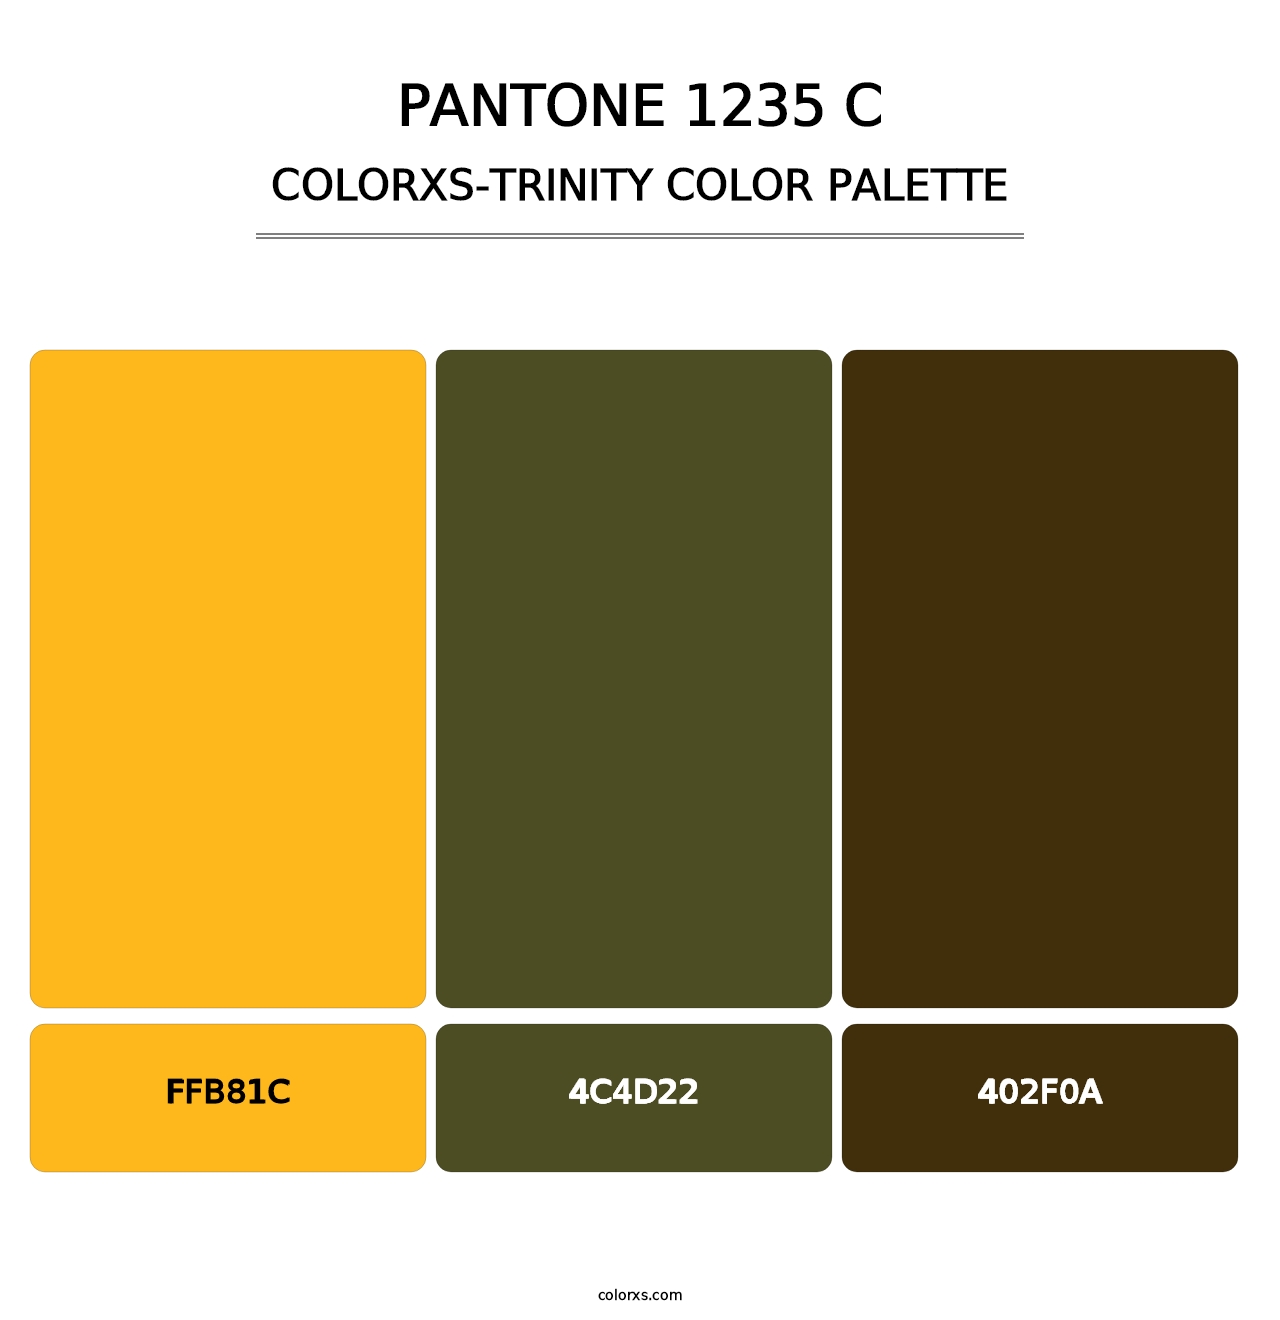 PANTONE 1235 C - Colorxs Trinity Palette